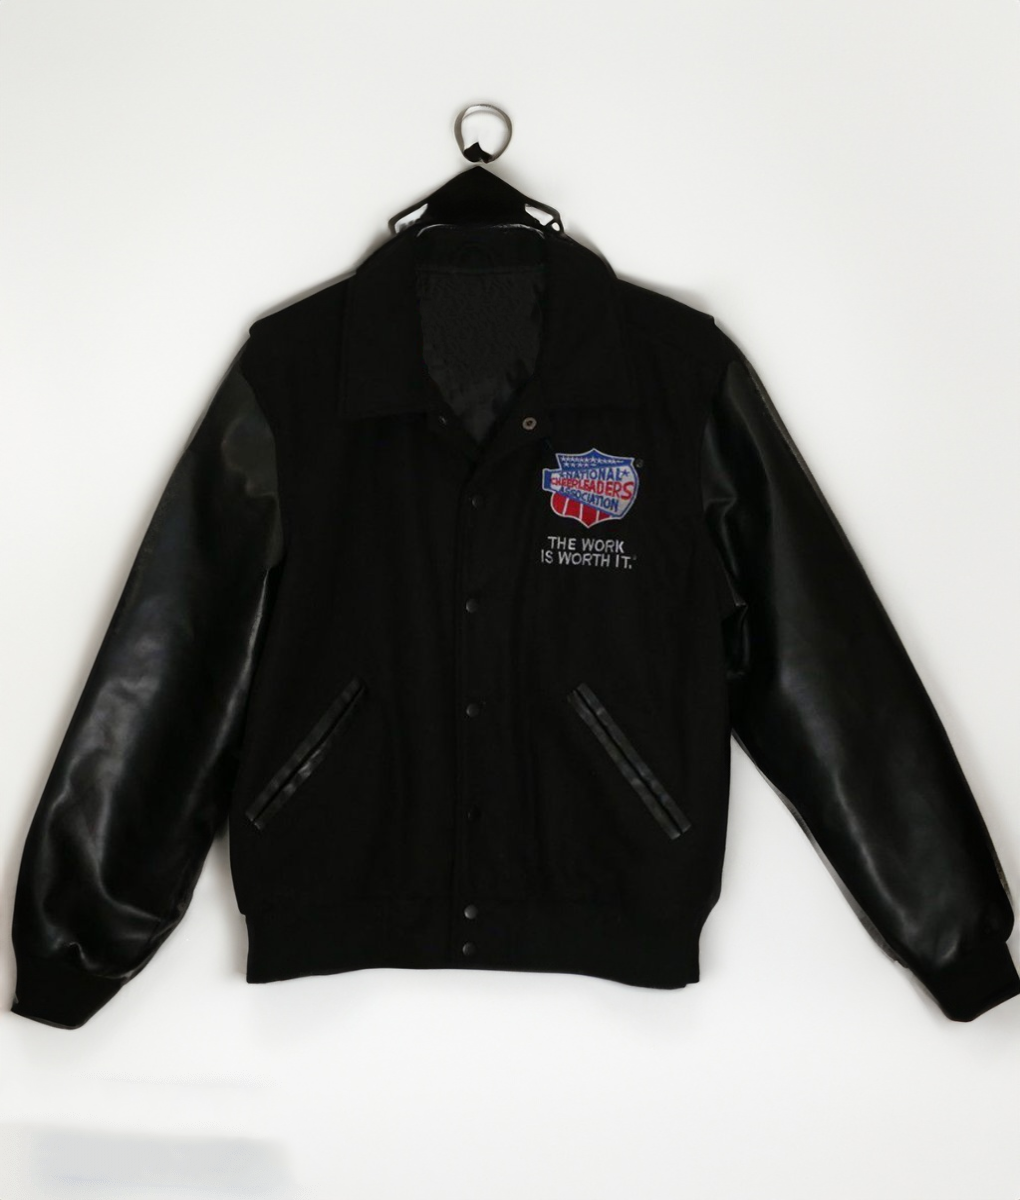 NCA Black Varsity Jacket